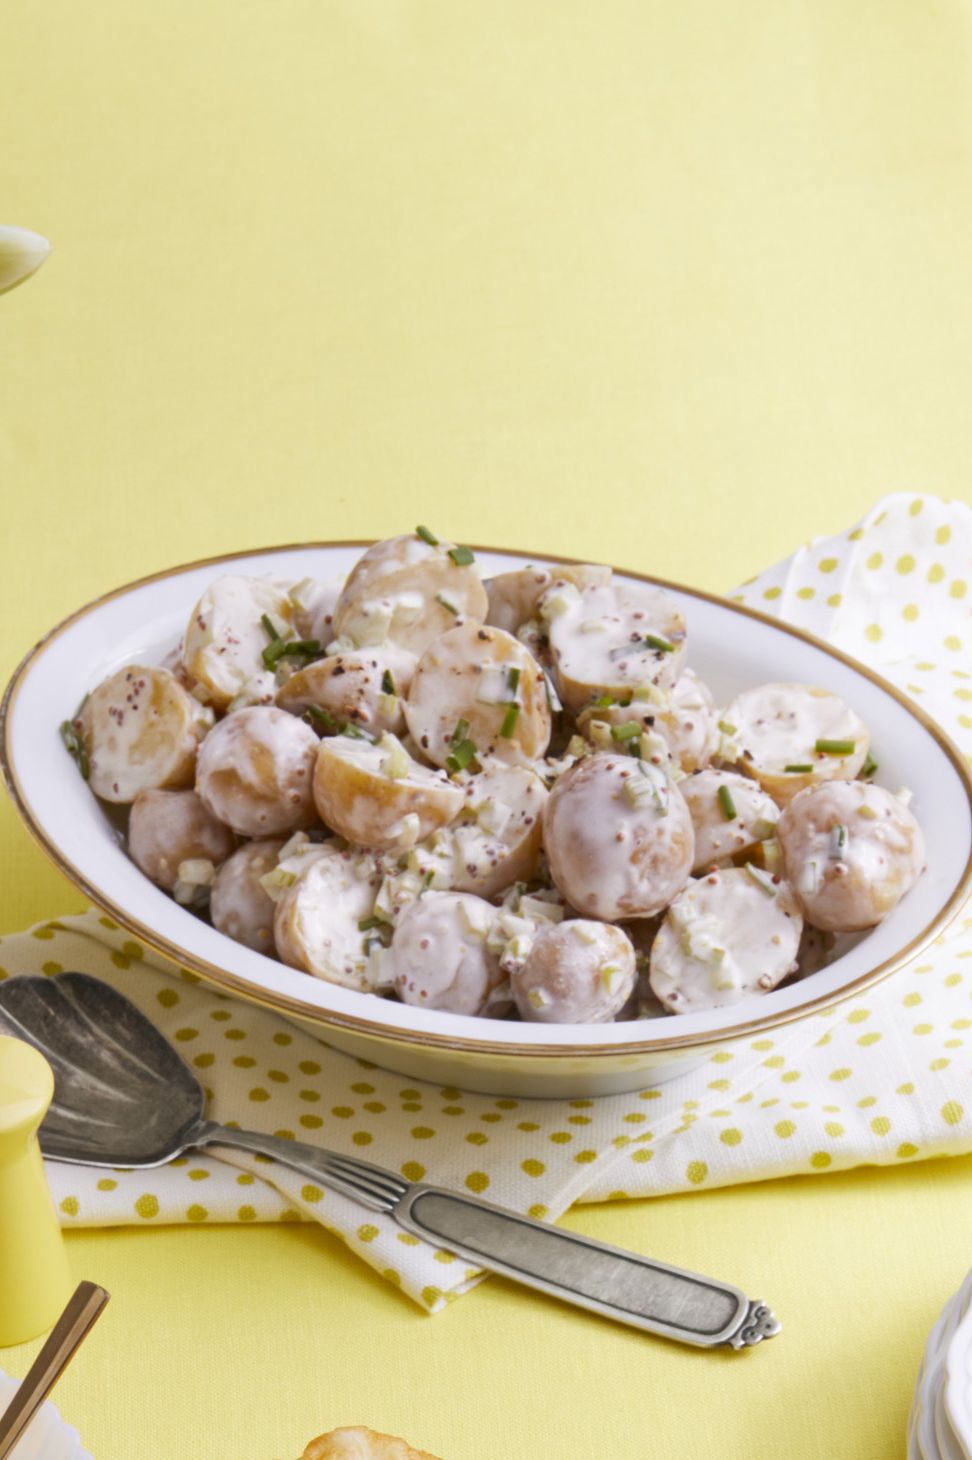 bbq side dishes - lemony potato salad